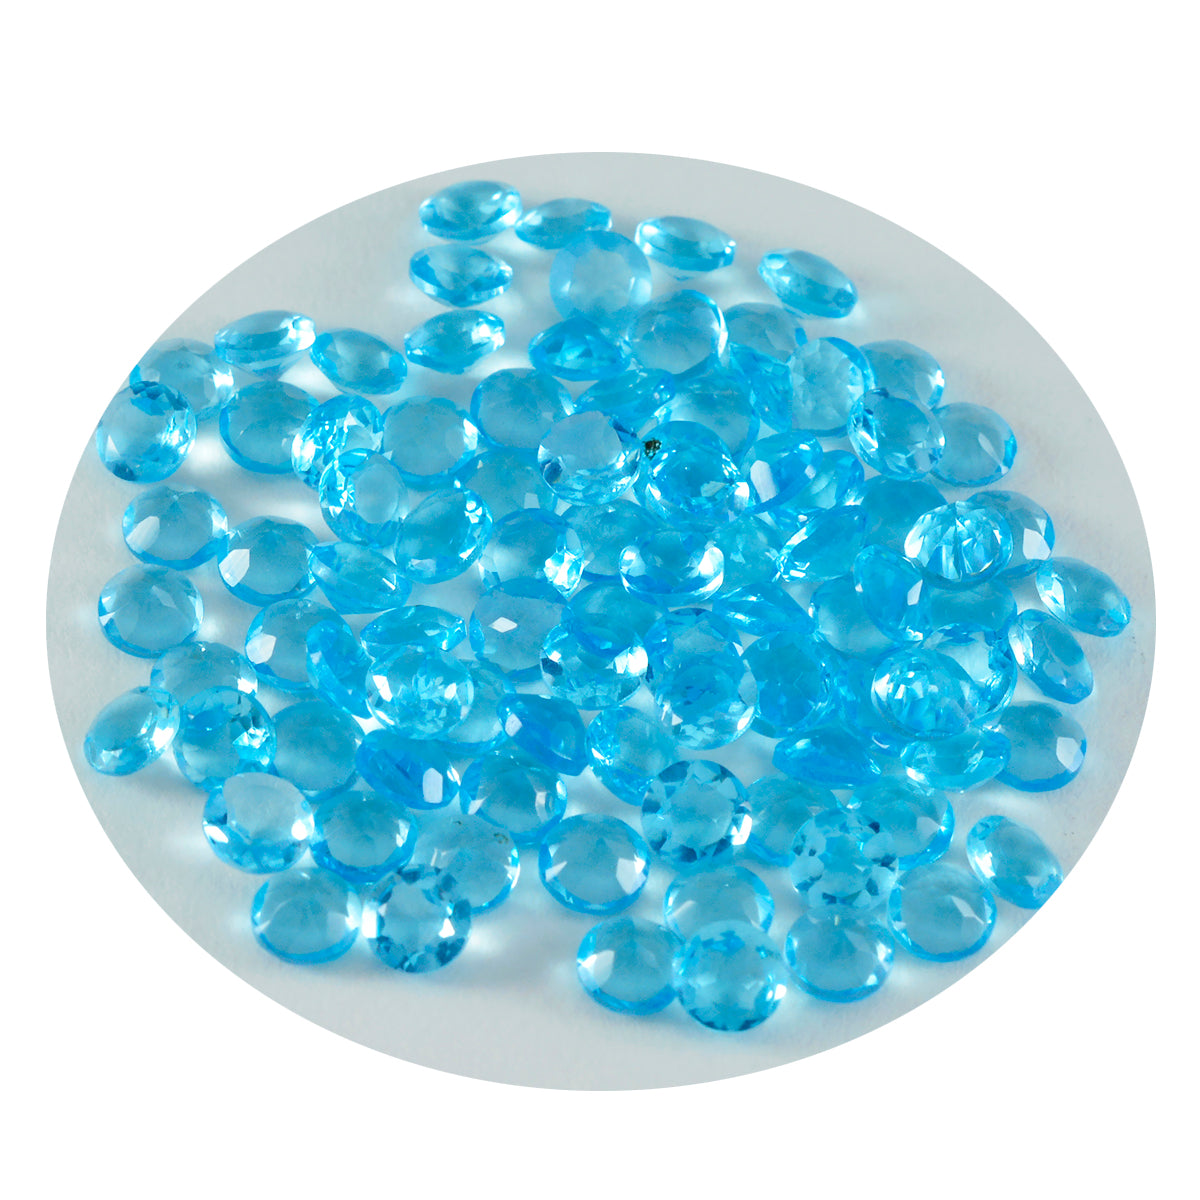 Riyogems 1PC Blue Topaz CZ gefacetteerde 3x3 mm ronde vorm zoete kwaliteitssteen